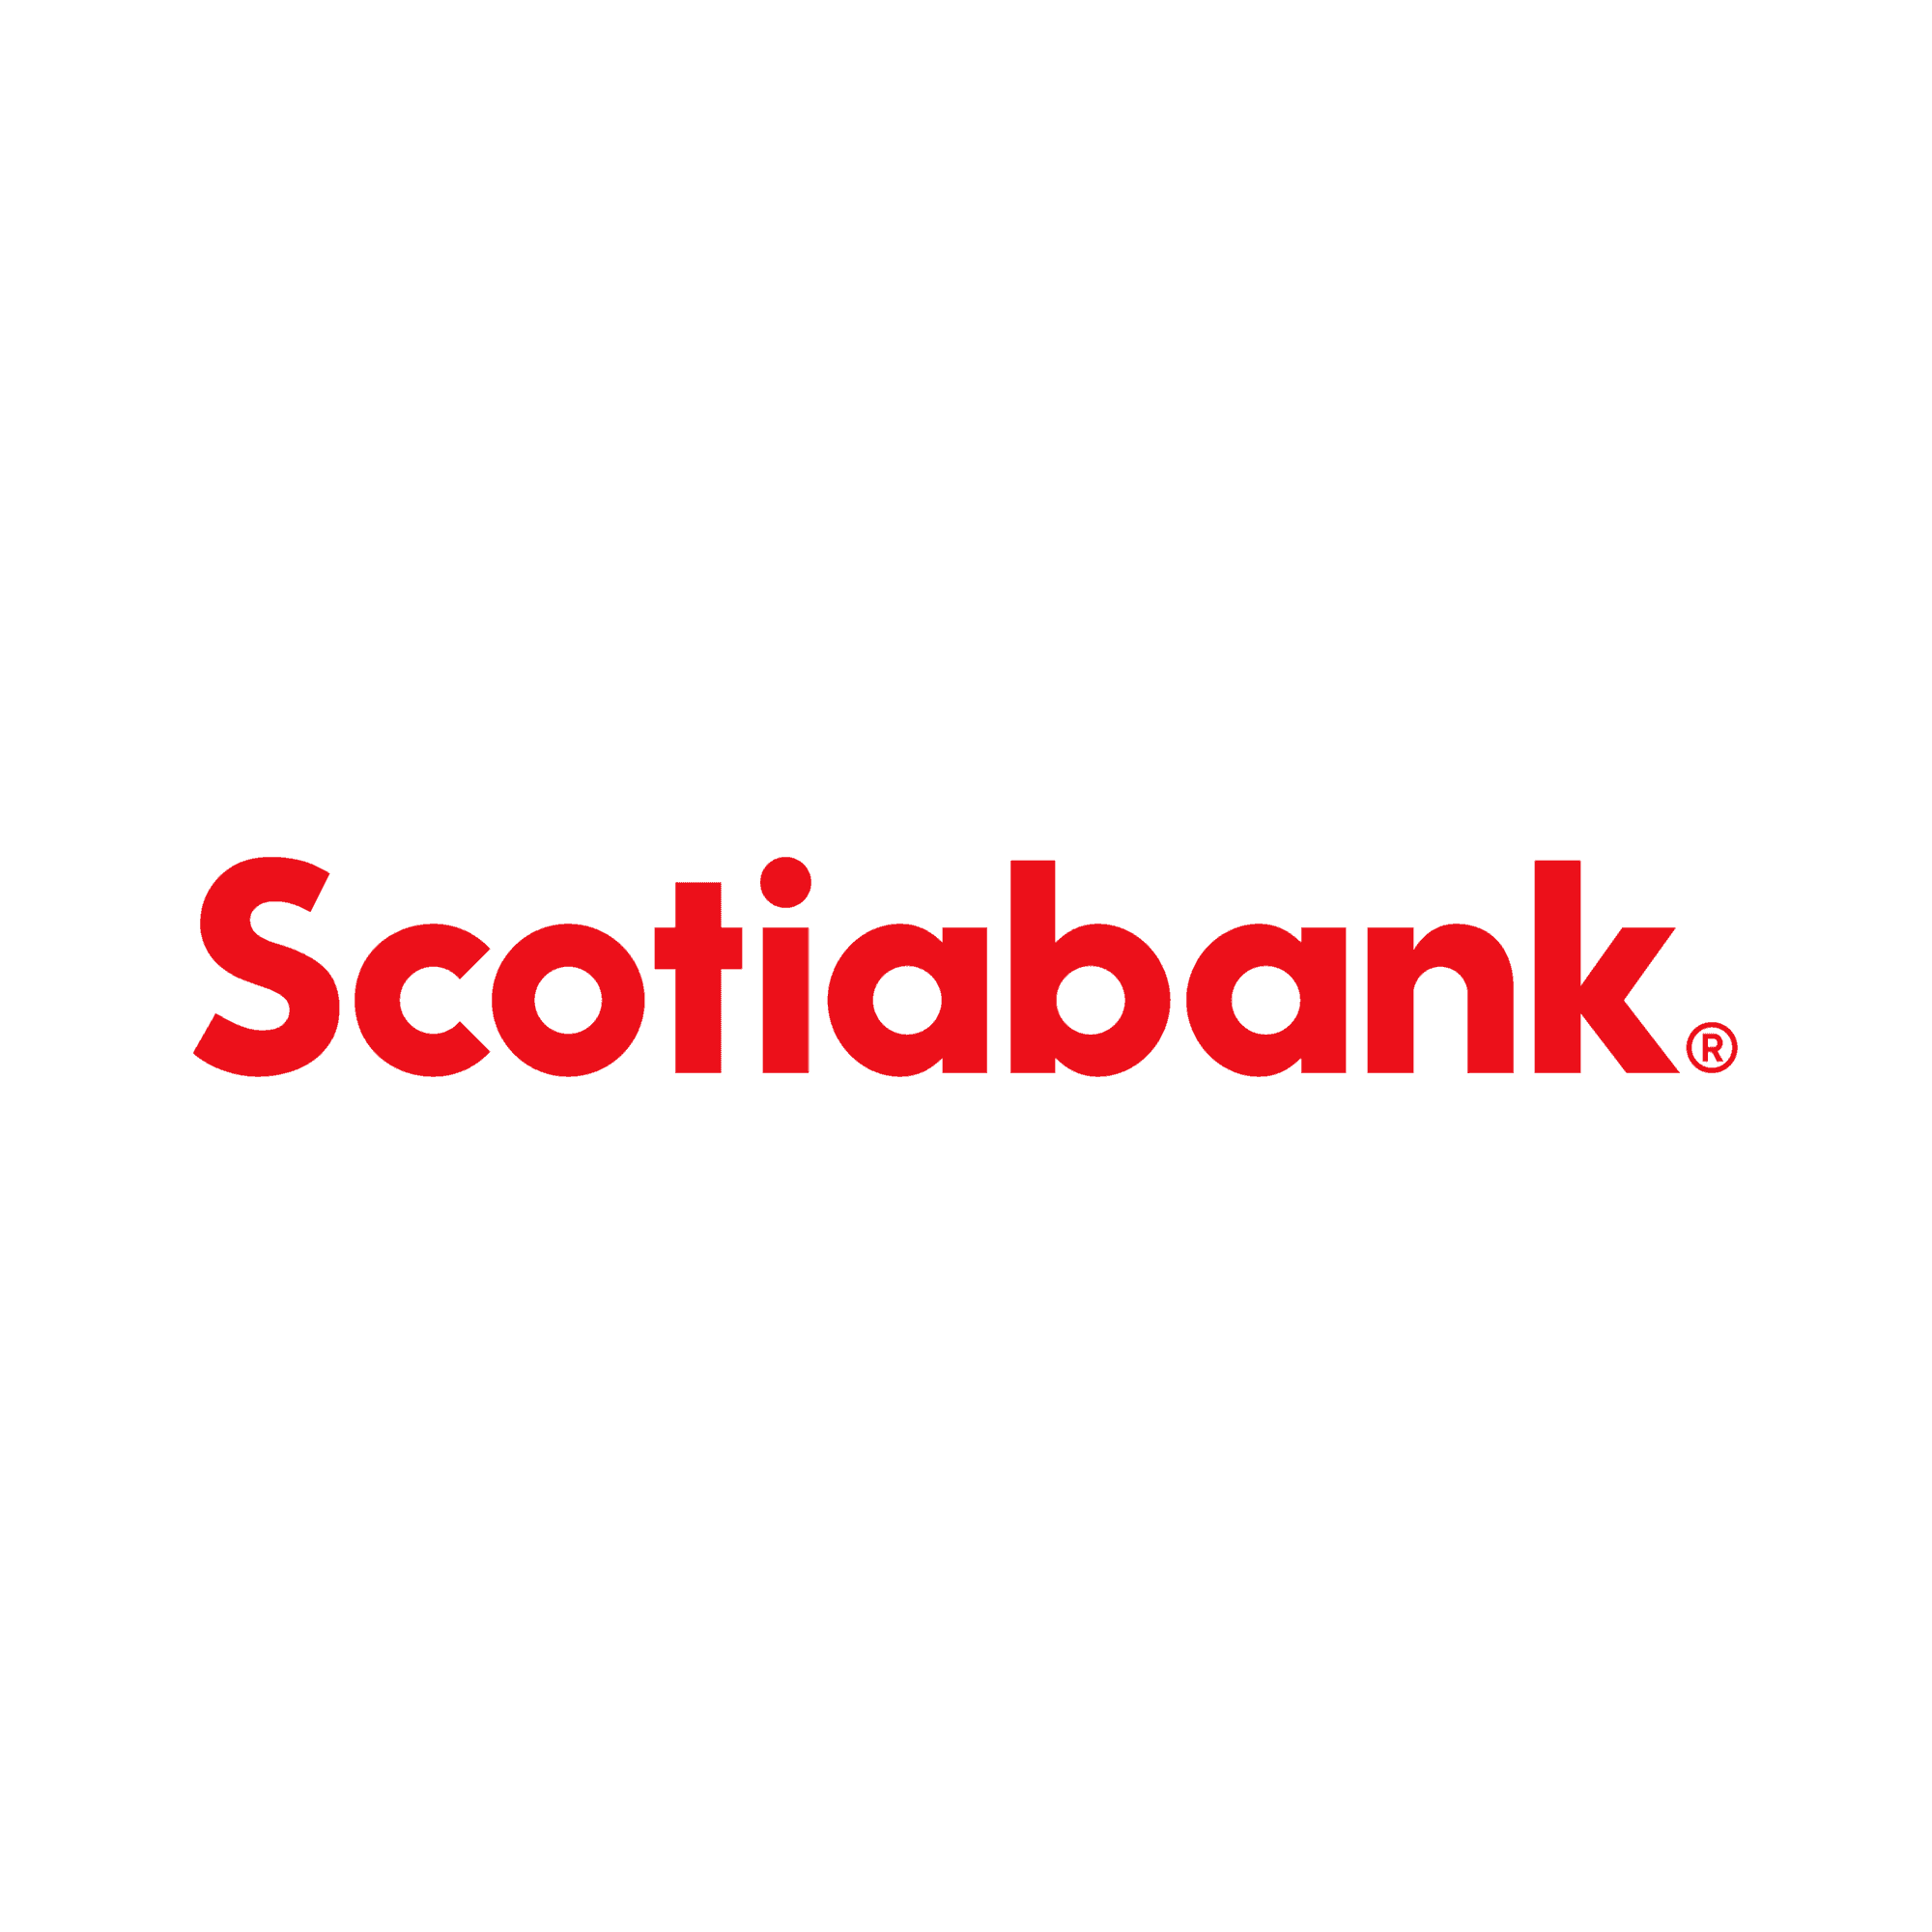 <p>Scotiabank</p> logo